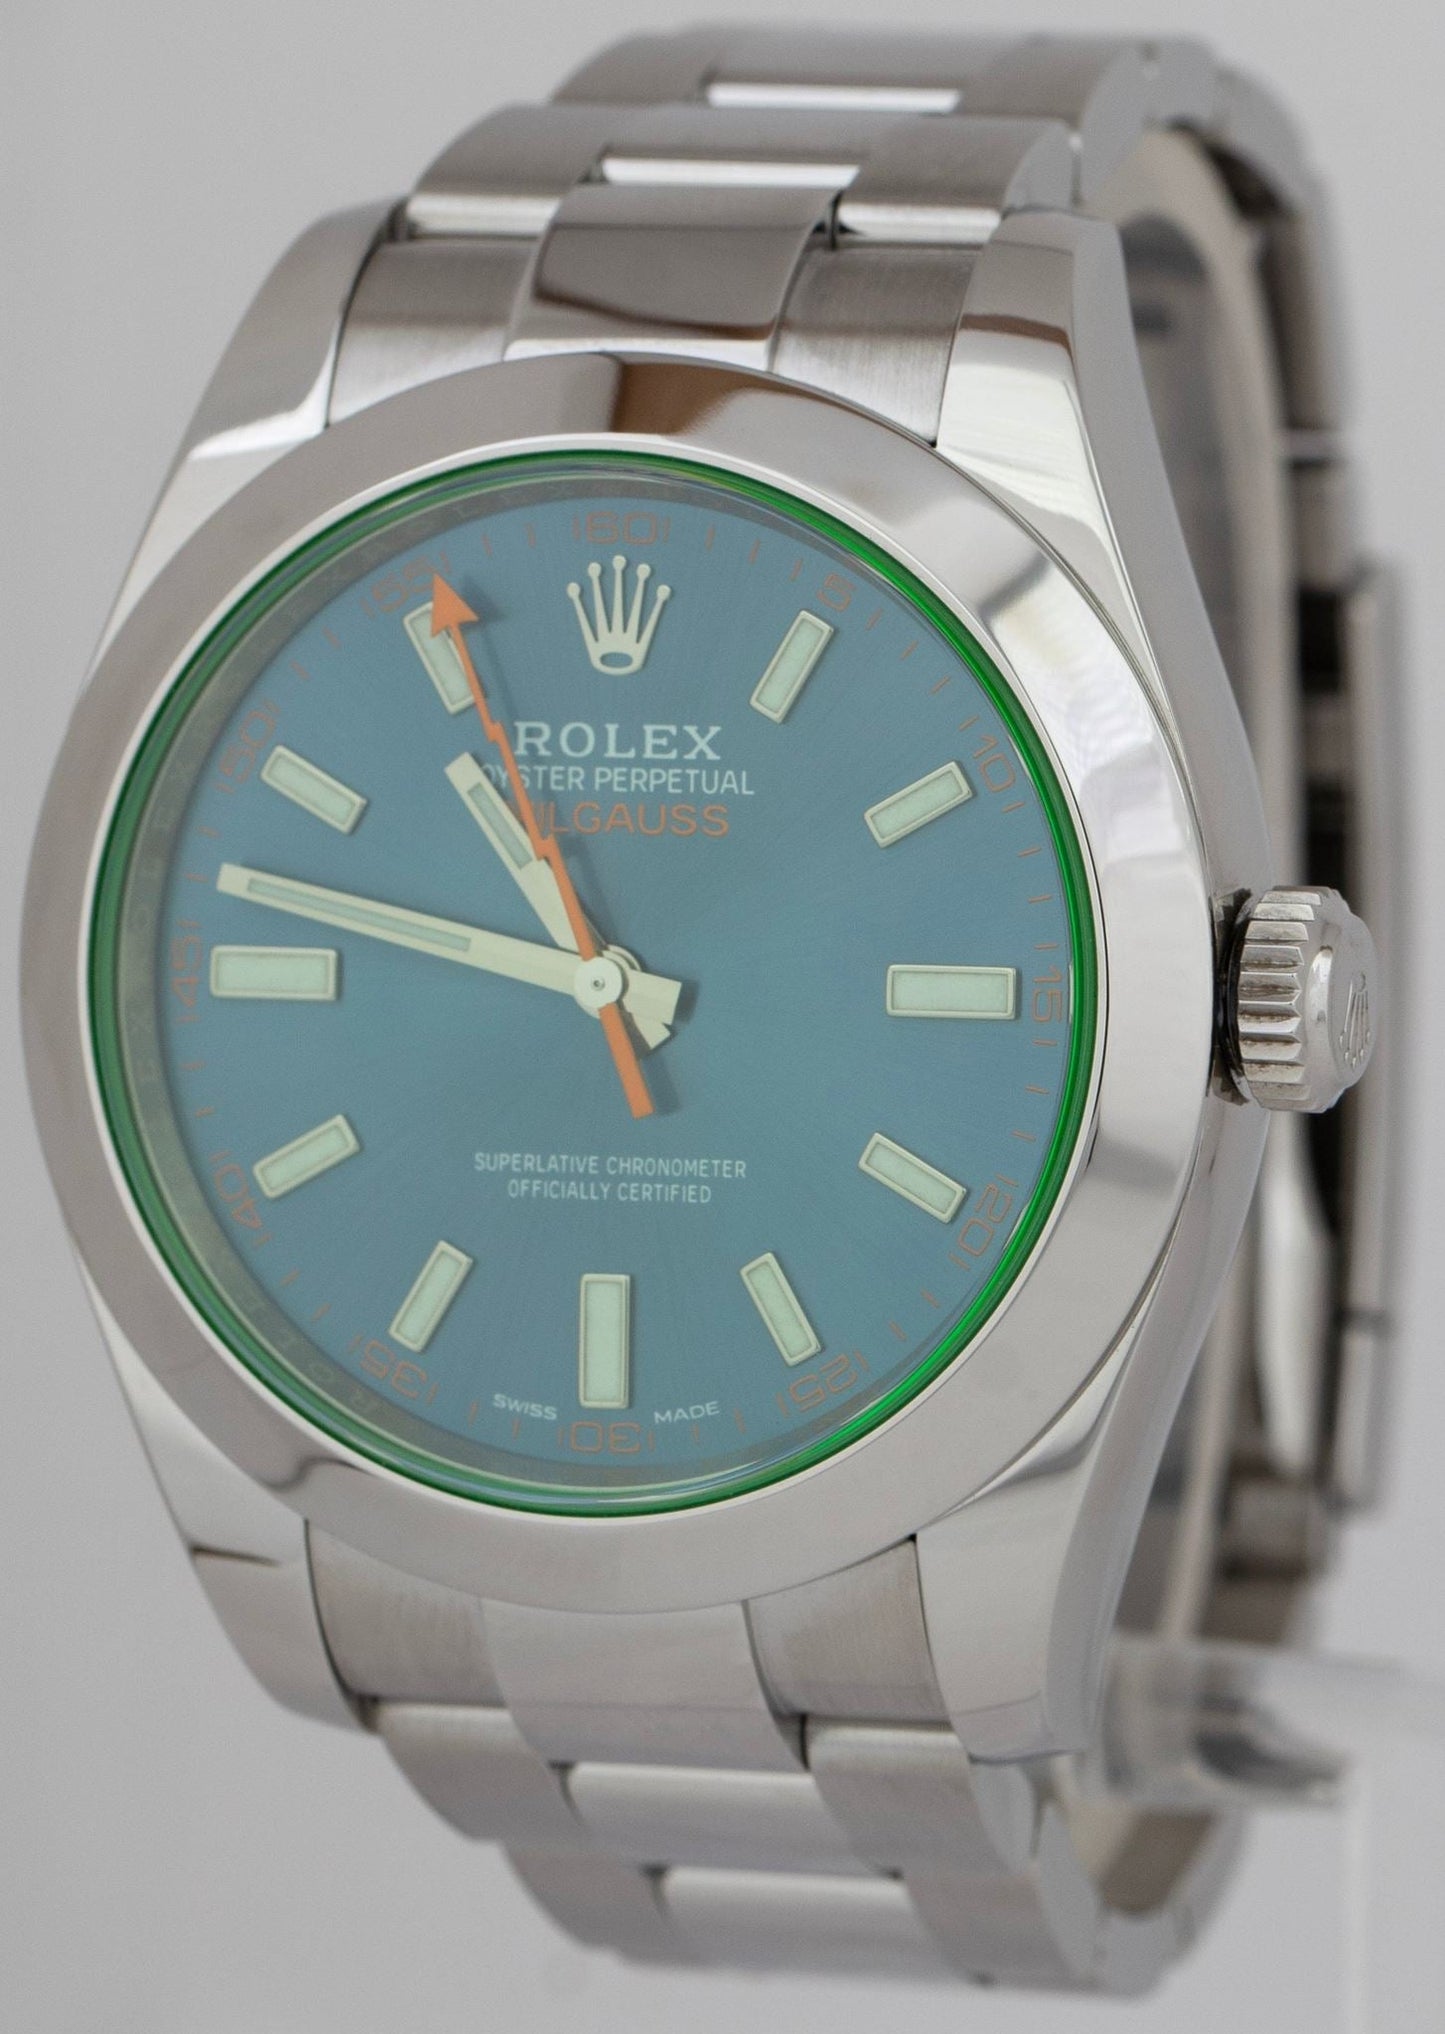 2021 CARD Rolex Milgauss Z-Blue Green Anniversary 116400 GV Stainless Watch B+P